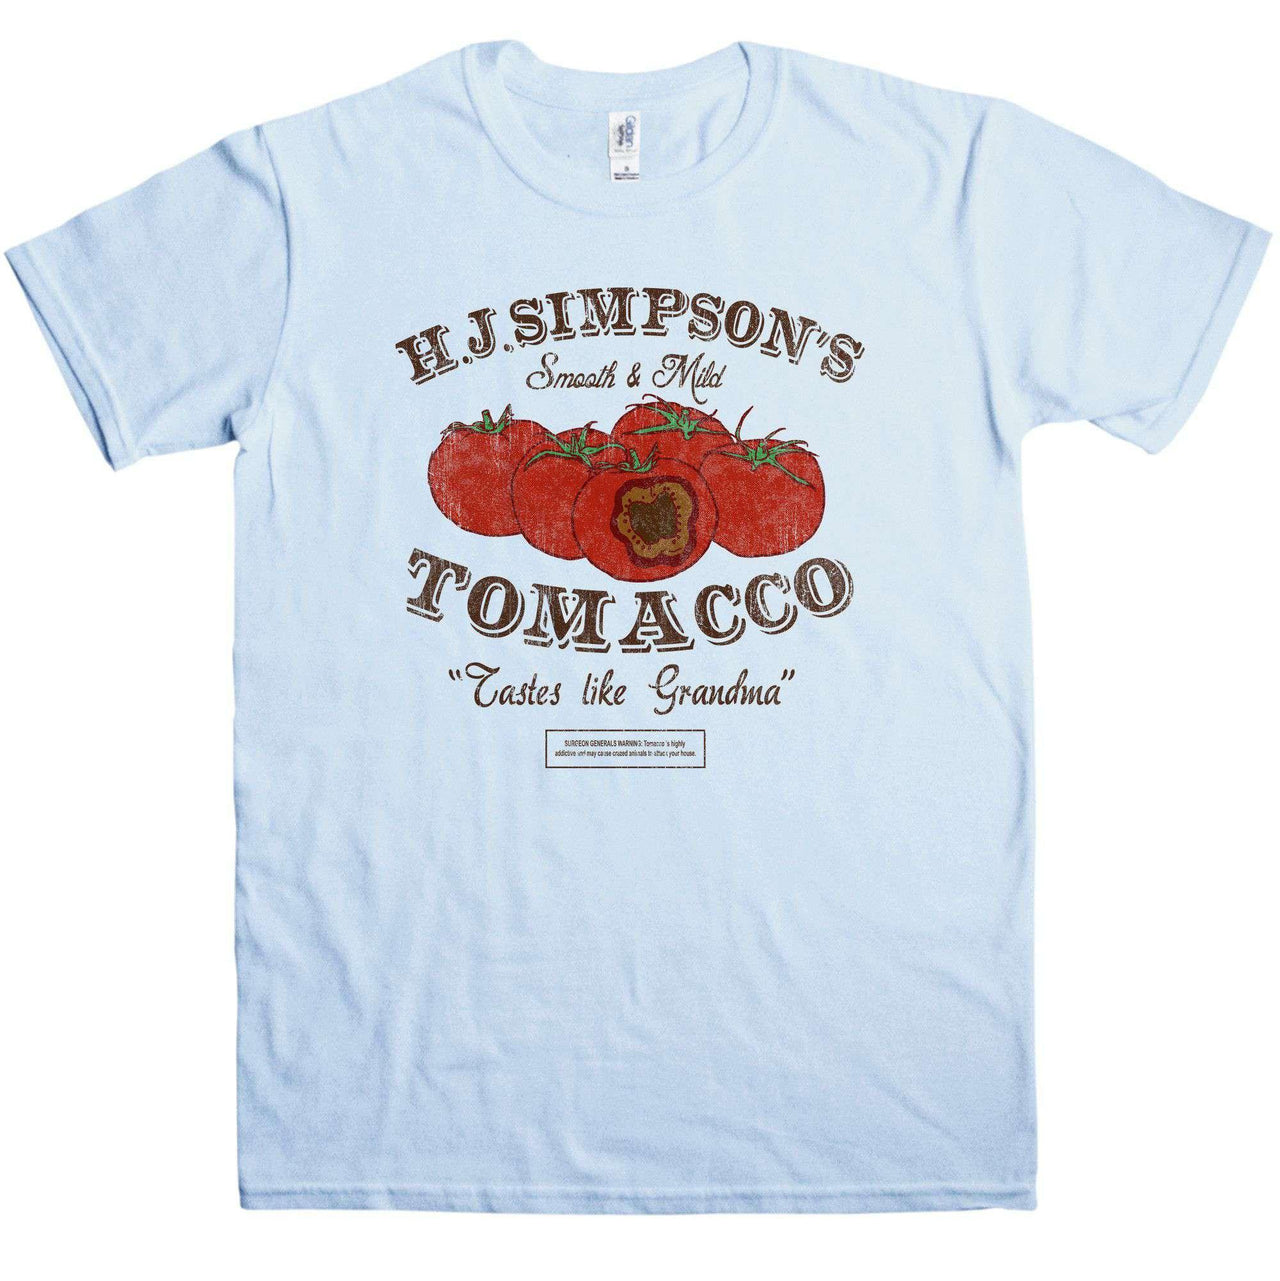 Tomacco Unisex T-Shirt For Men And Women 8Ball